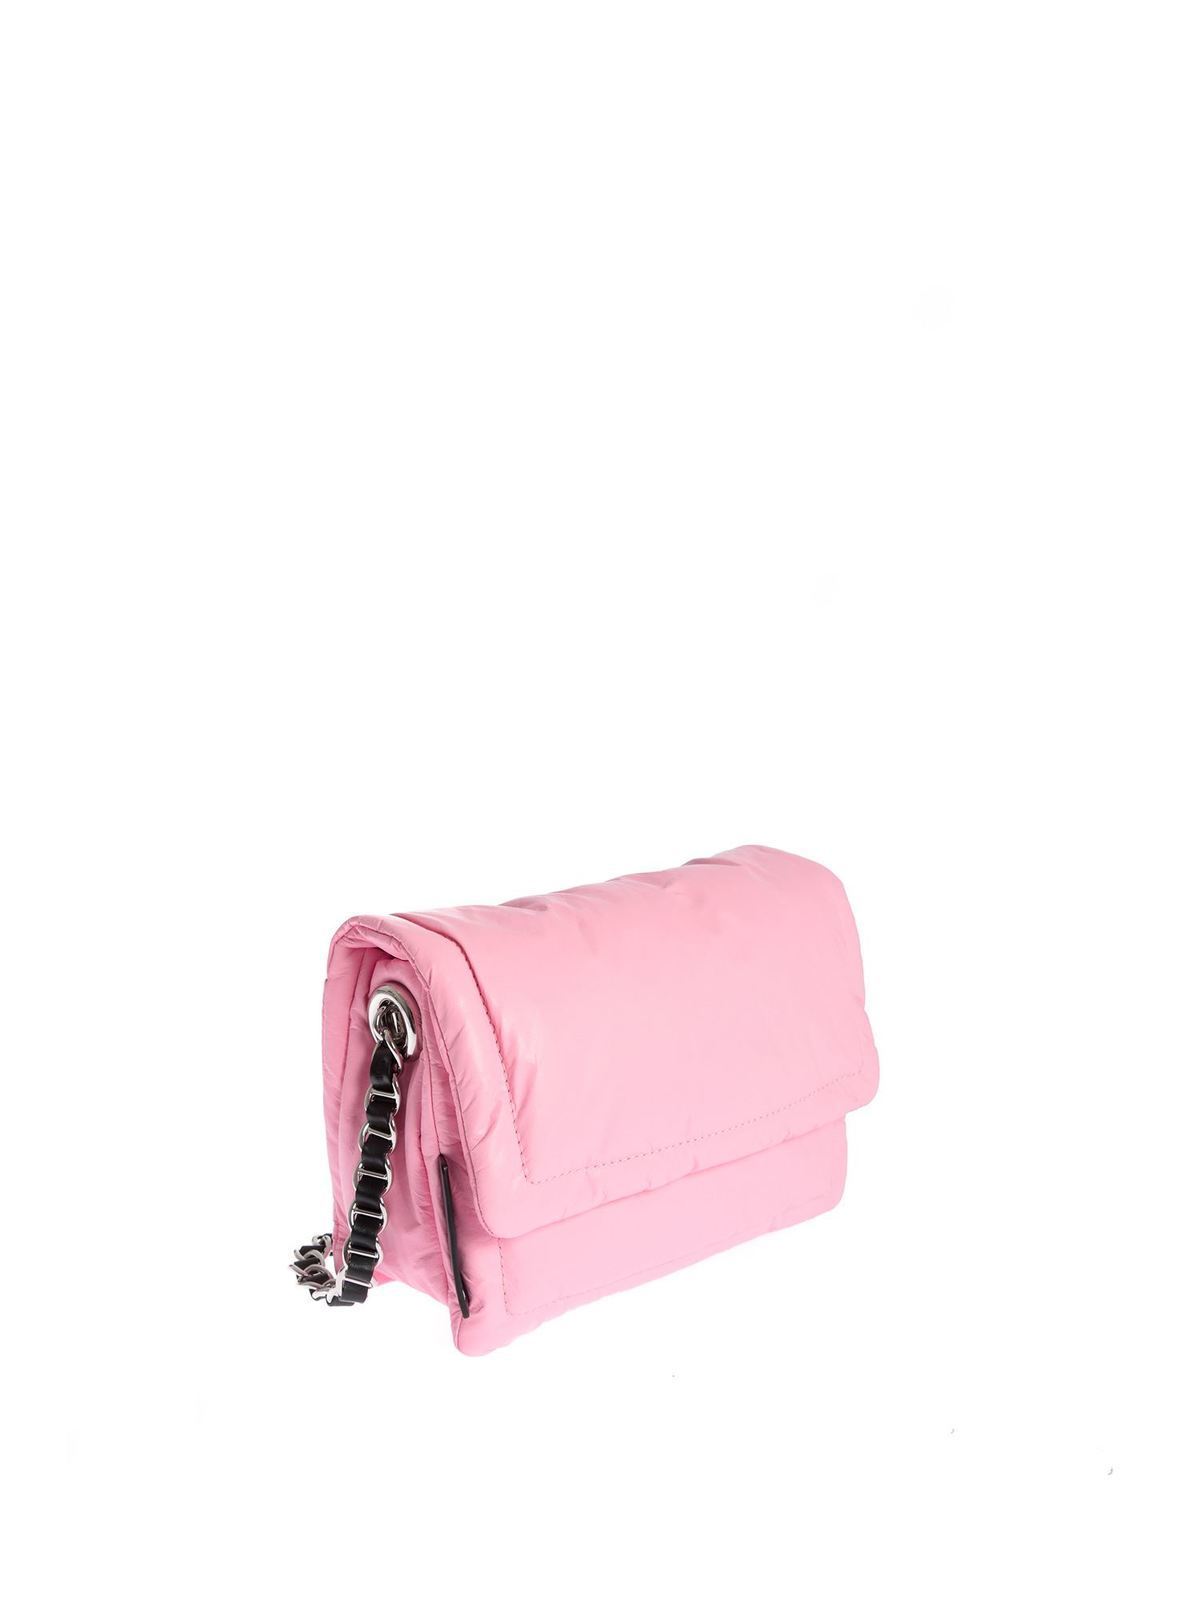 Marc Jacobs Women's The Pillow Bag - Powder Pink